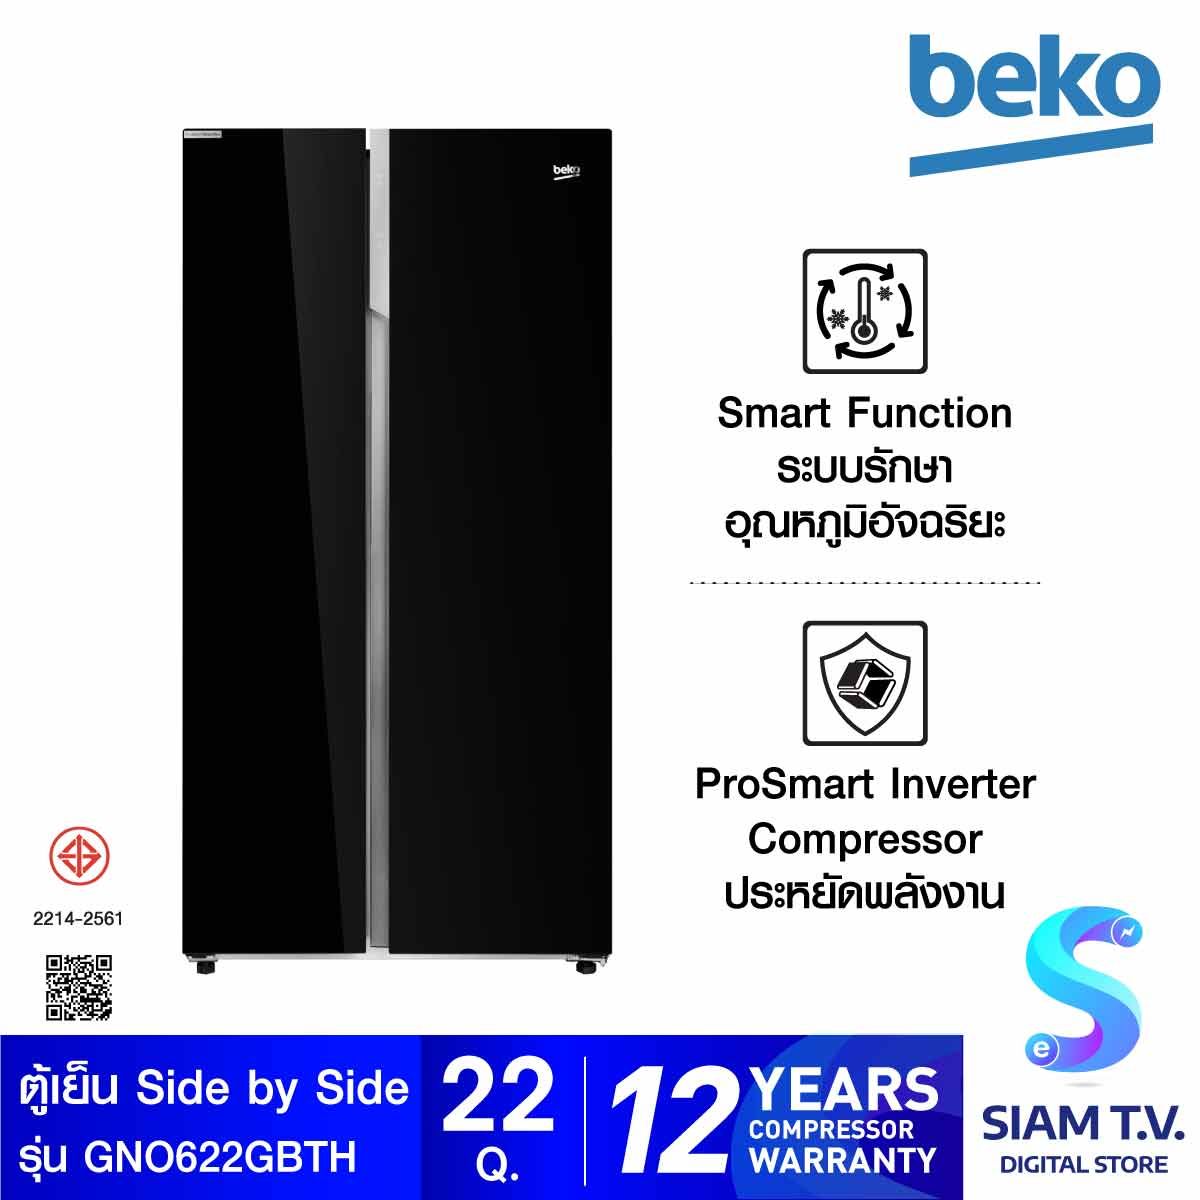 BEKO ตู้เย็น SIDE BY SIDE 22 Q สี Glass Black  รุ่น GNO62251GBTH